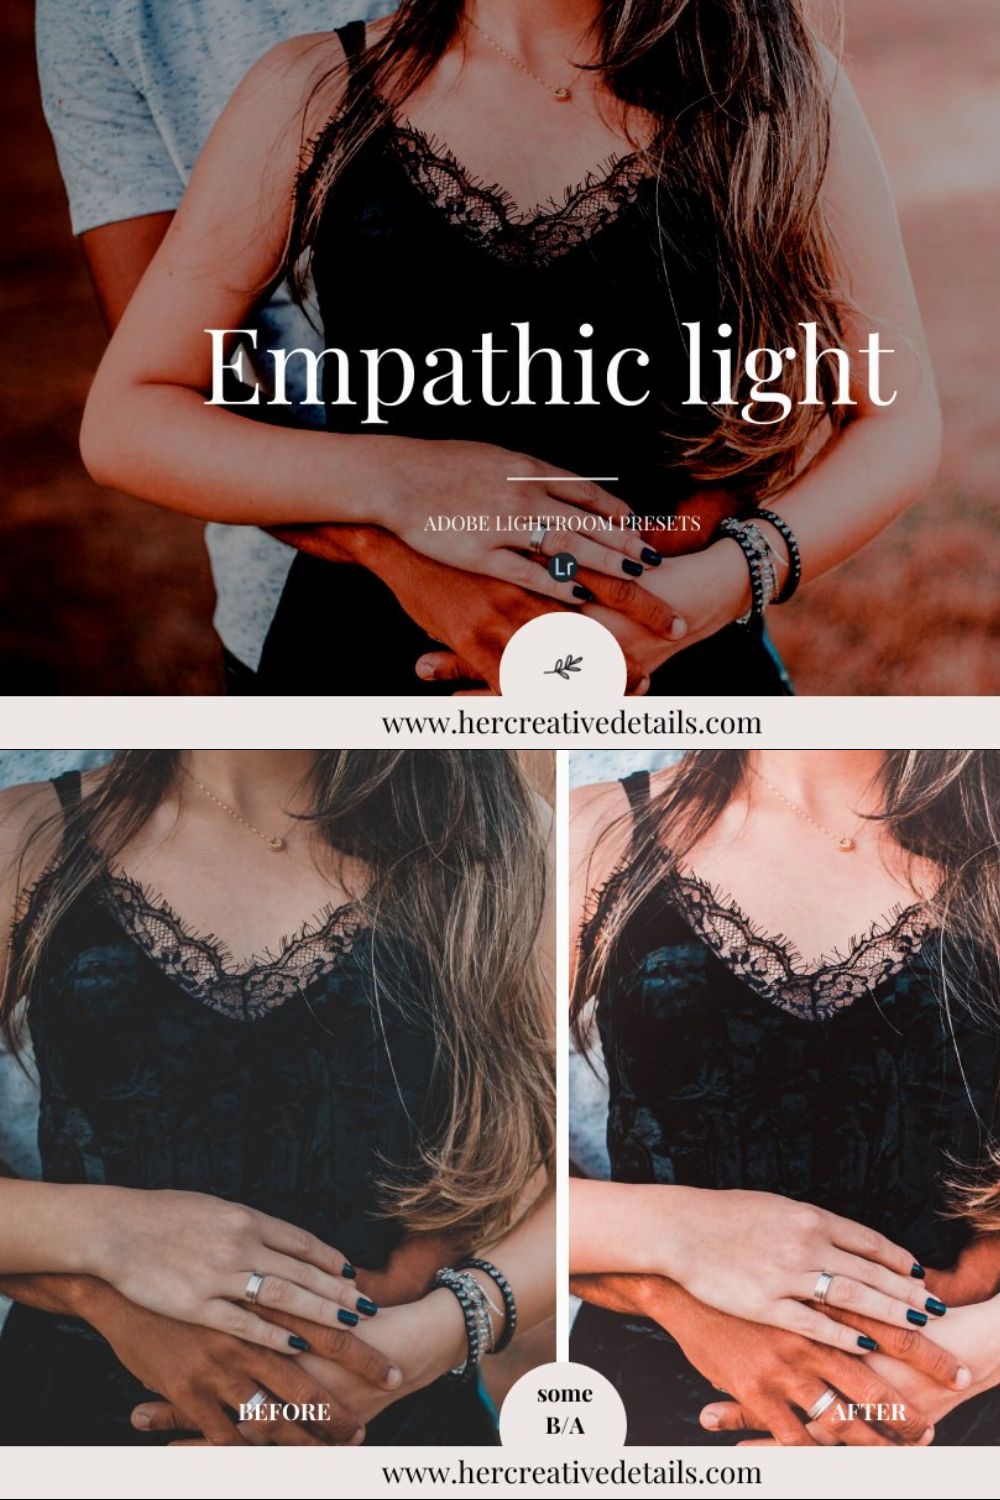 Empathic light preset pinterest preview image.